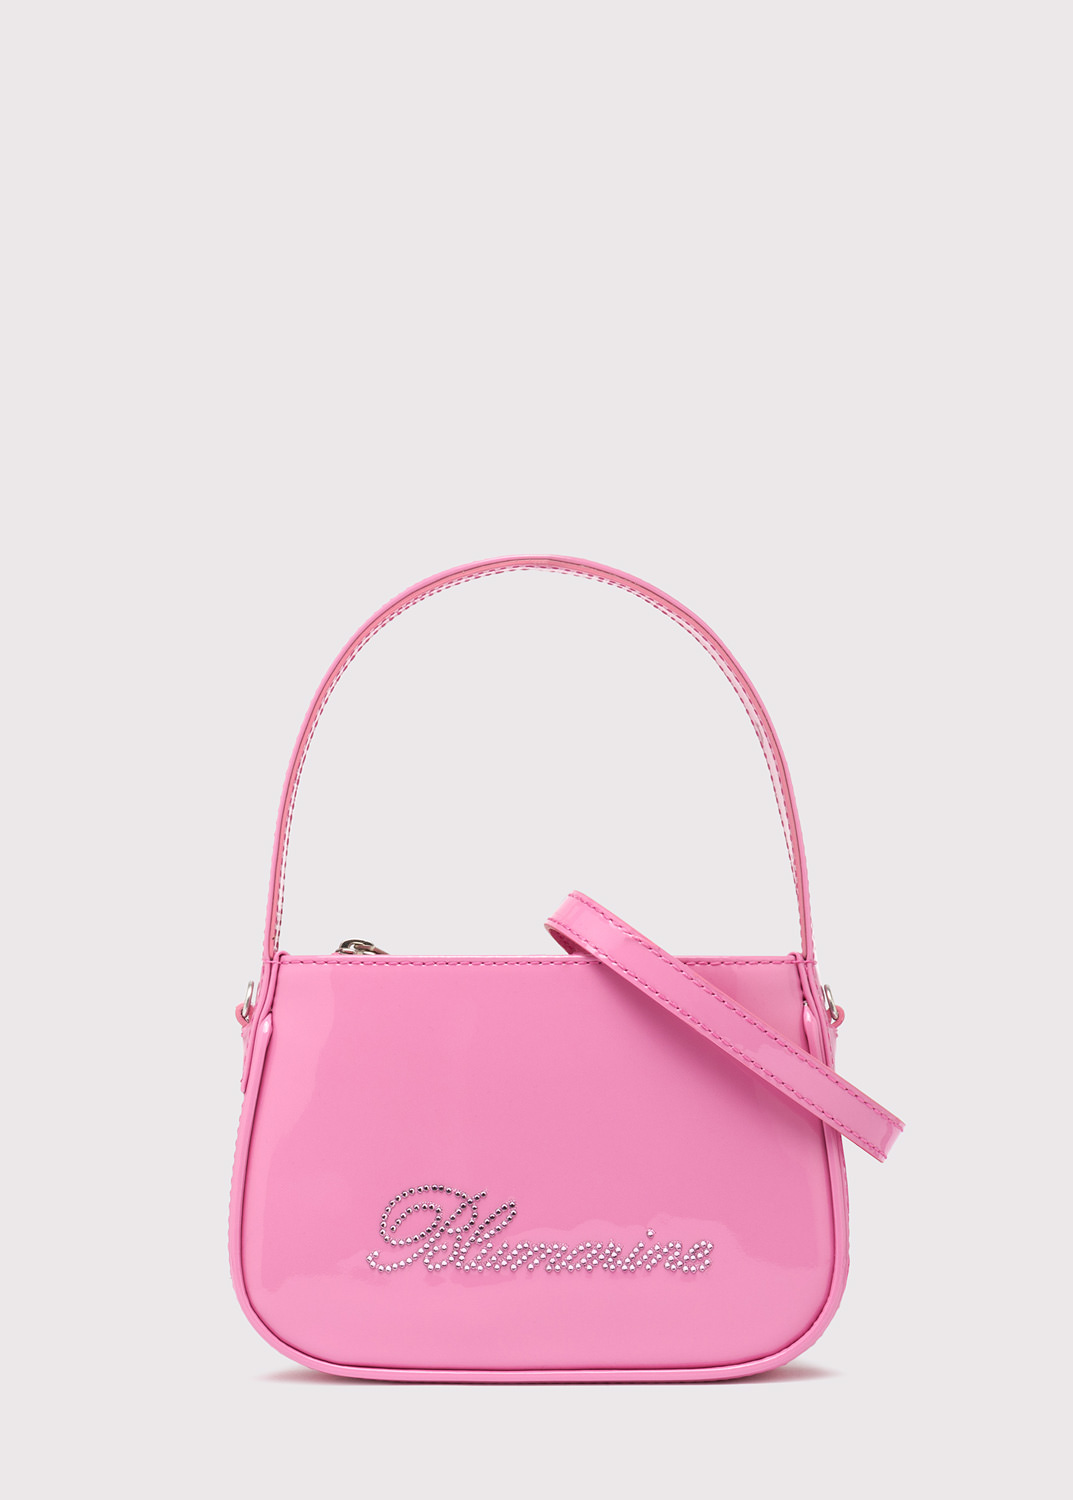 Patent handbag with logo | Blumarine